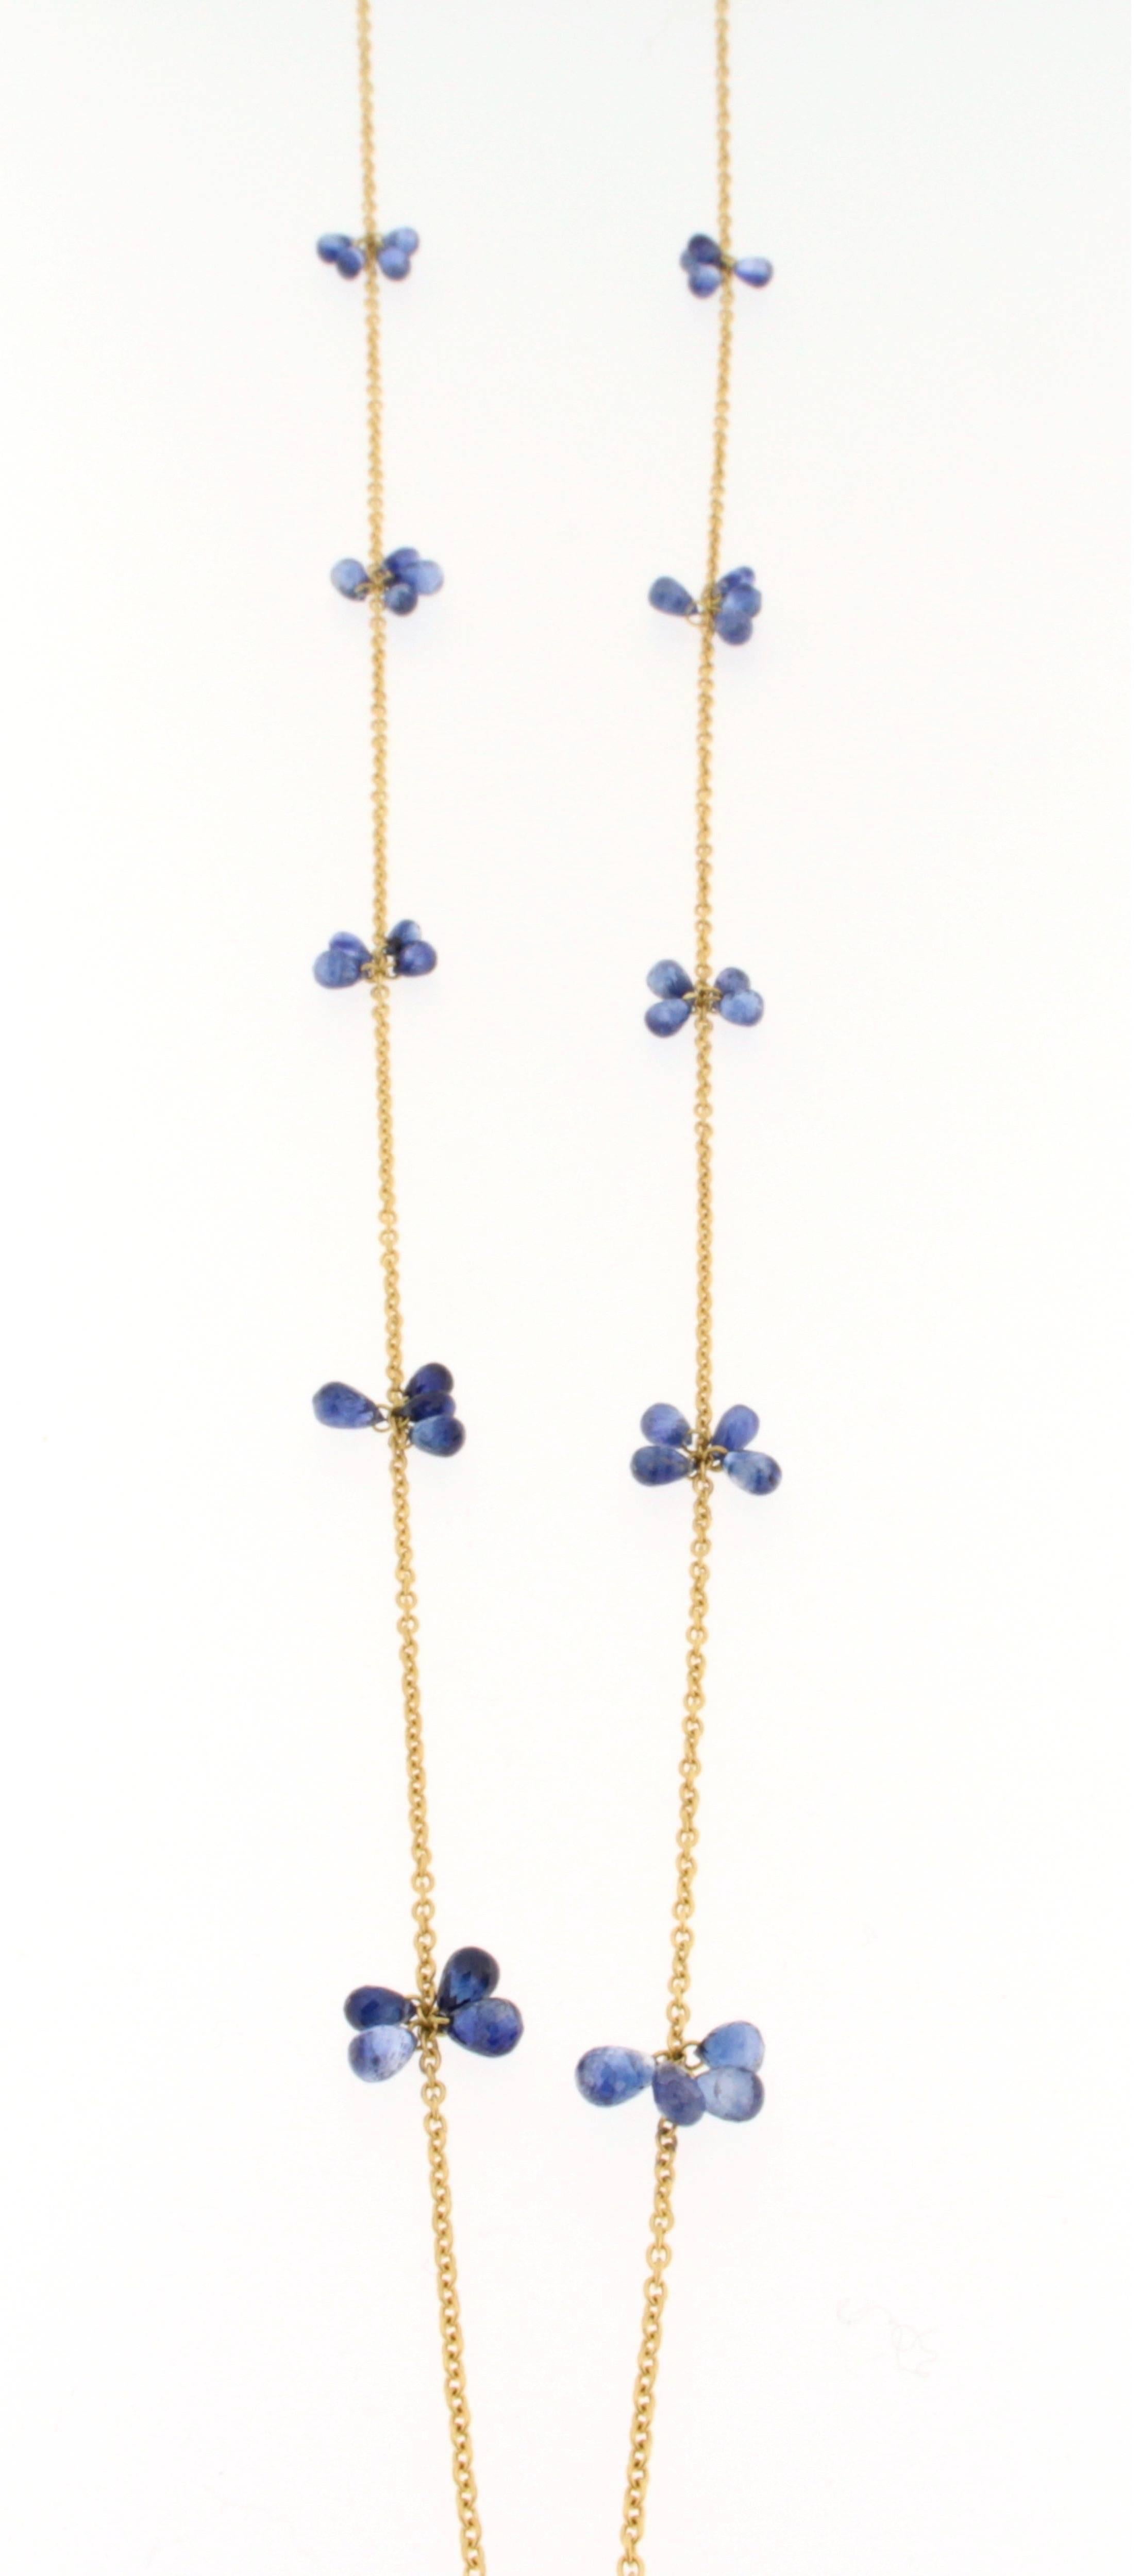 Briolette Cut Jona Blue Sapphire 18 Karat Yellow Gold Long Chain Necklace